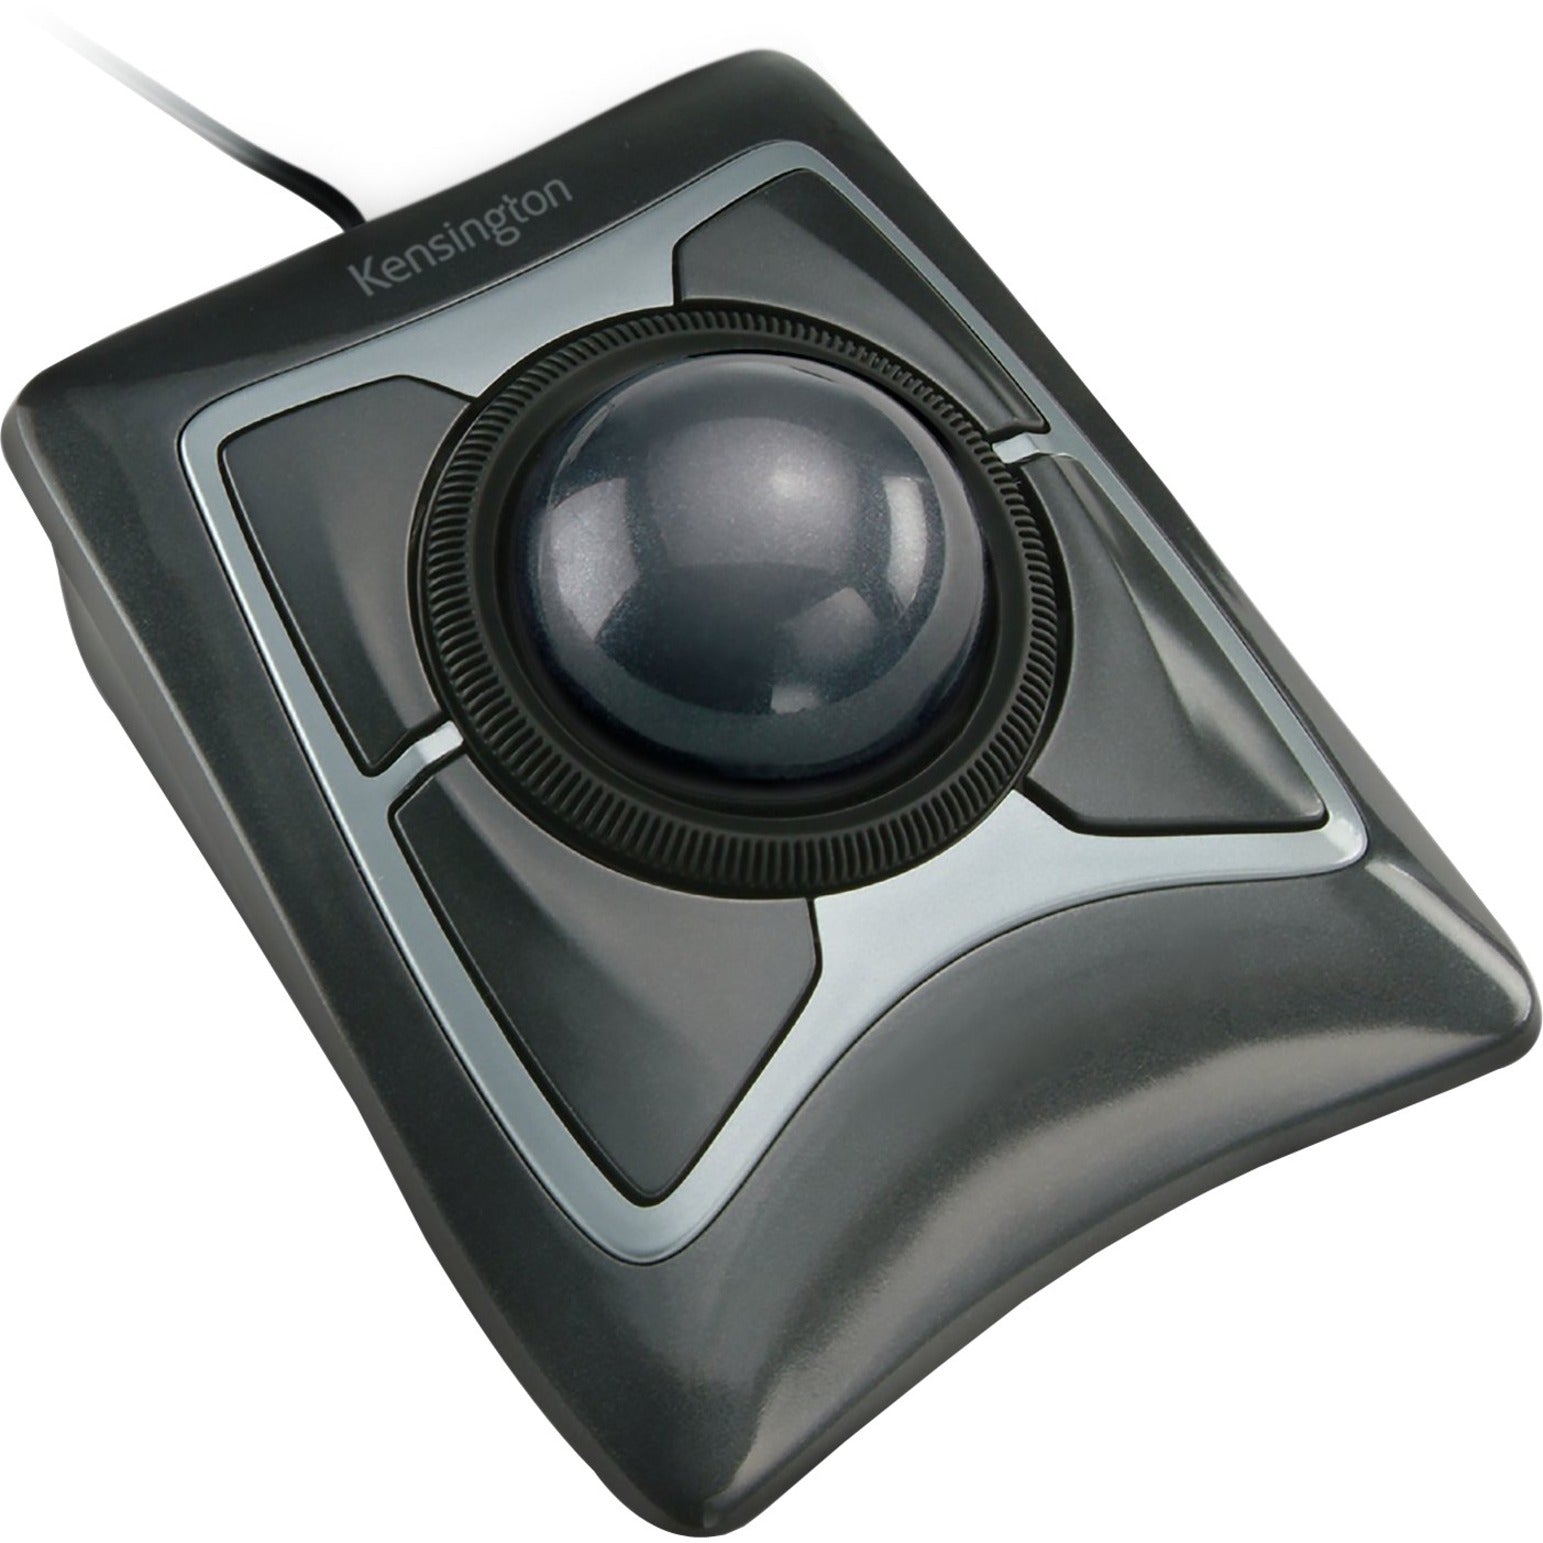 Kensington K64325 Expert Mouse Wired Trackball, Ergonomic Symmetrical Design, Optical USB, 5 Year Warranty